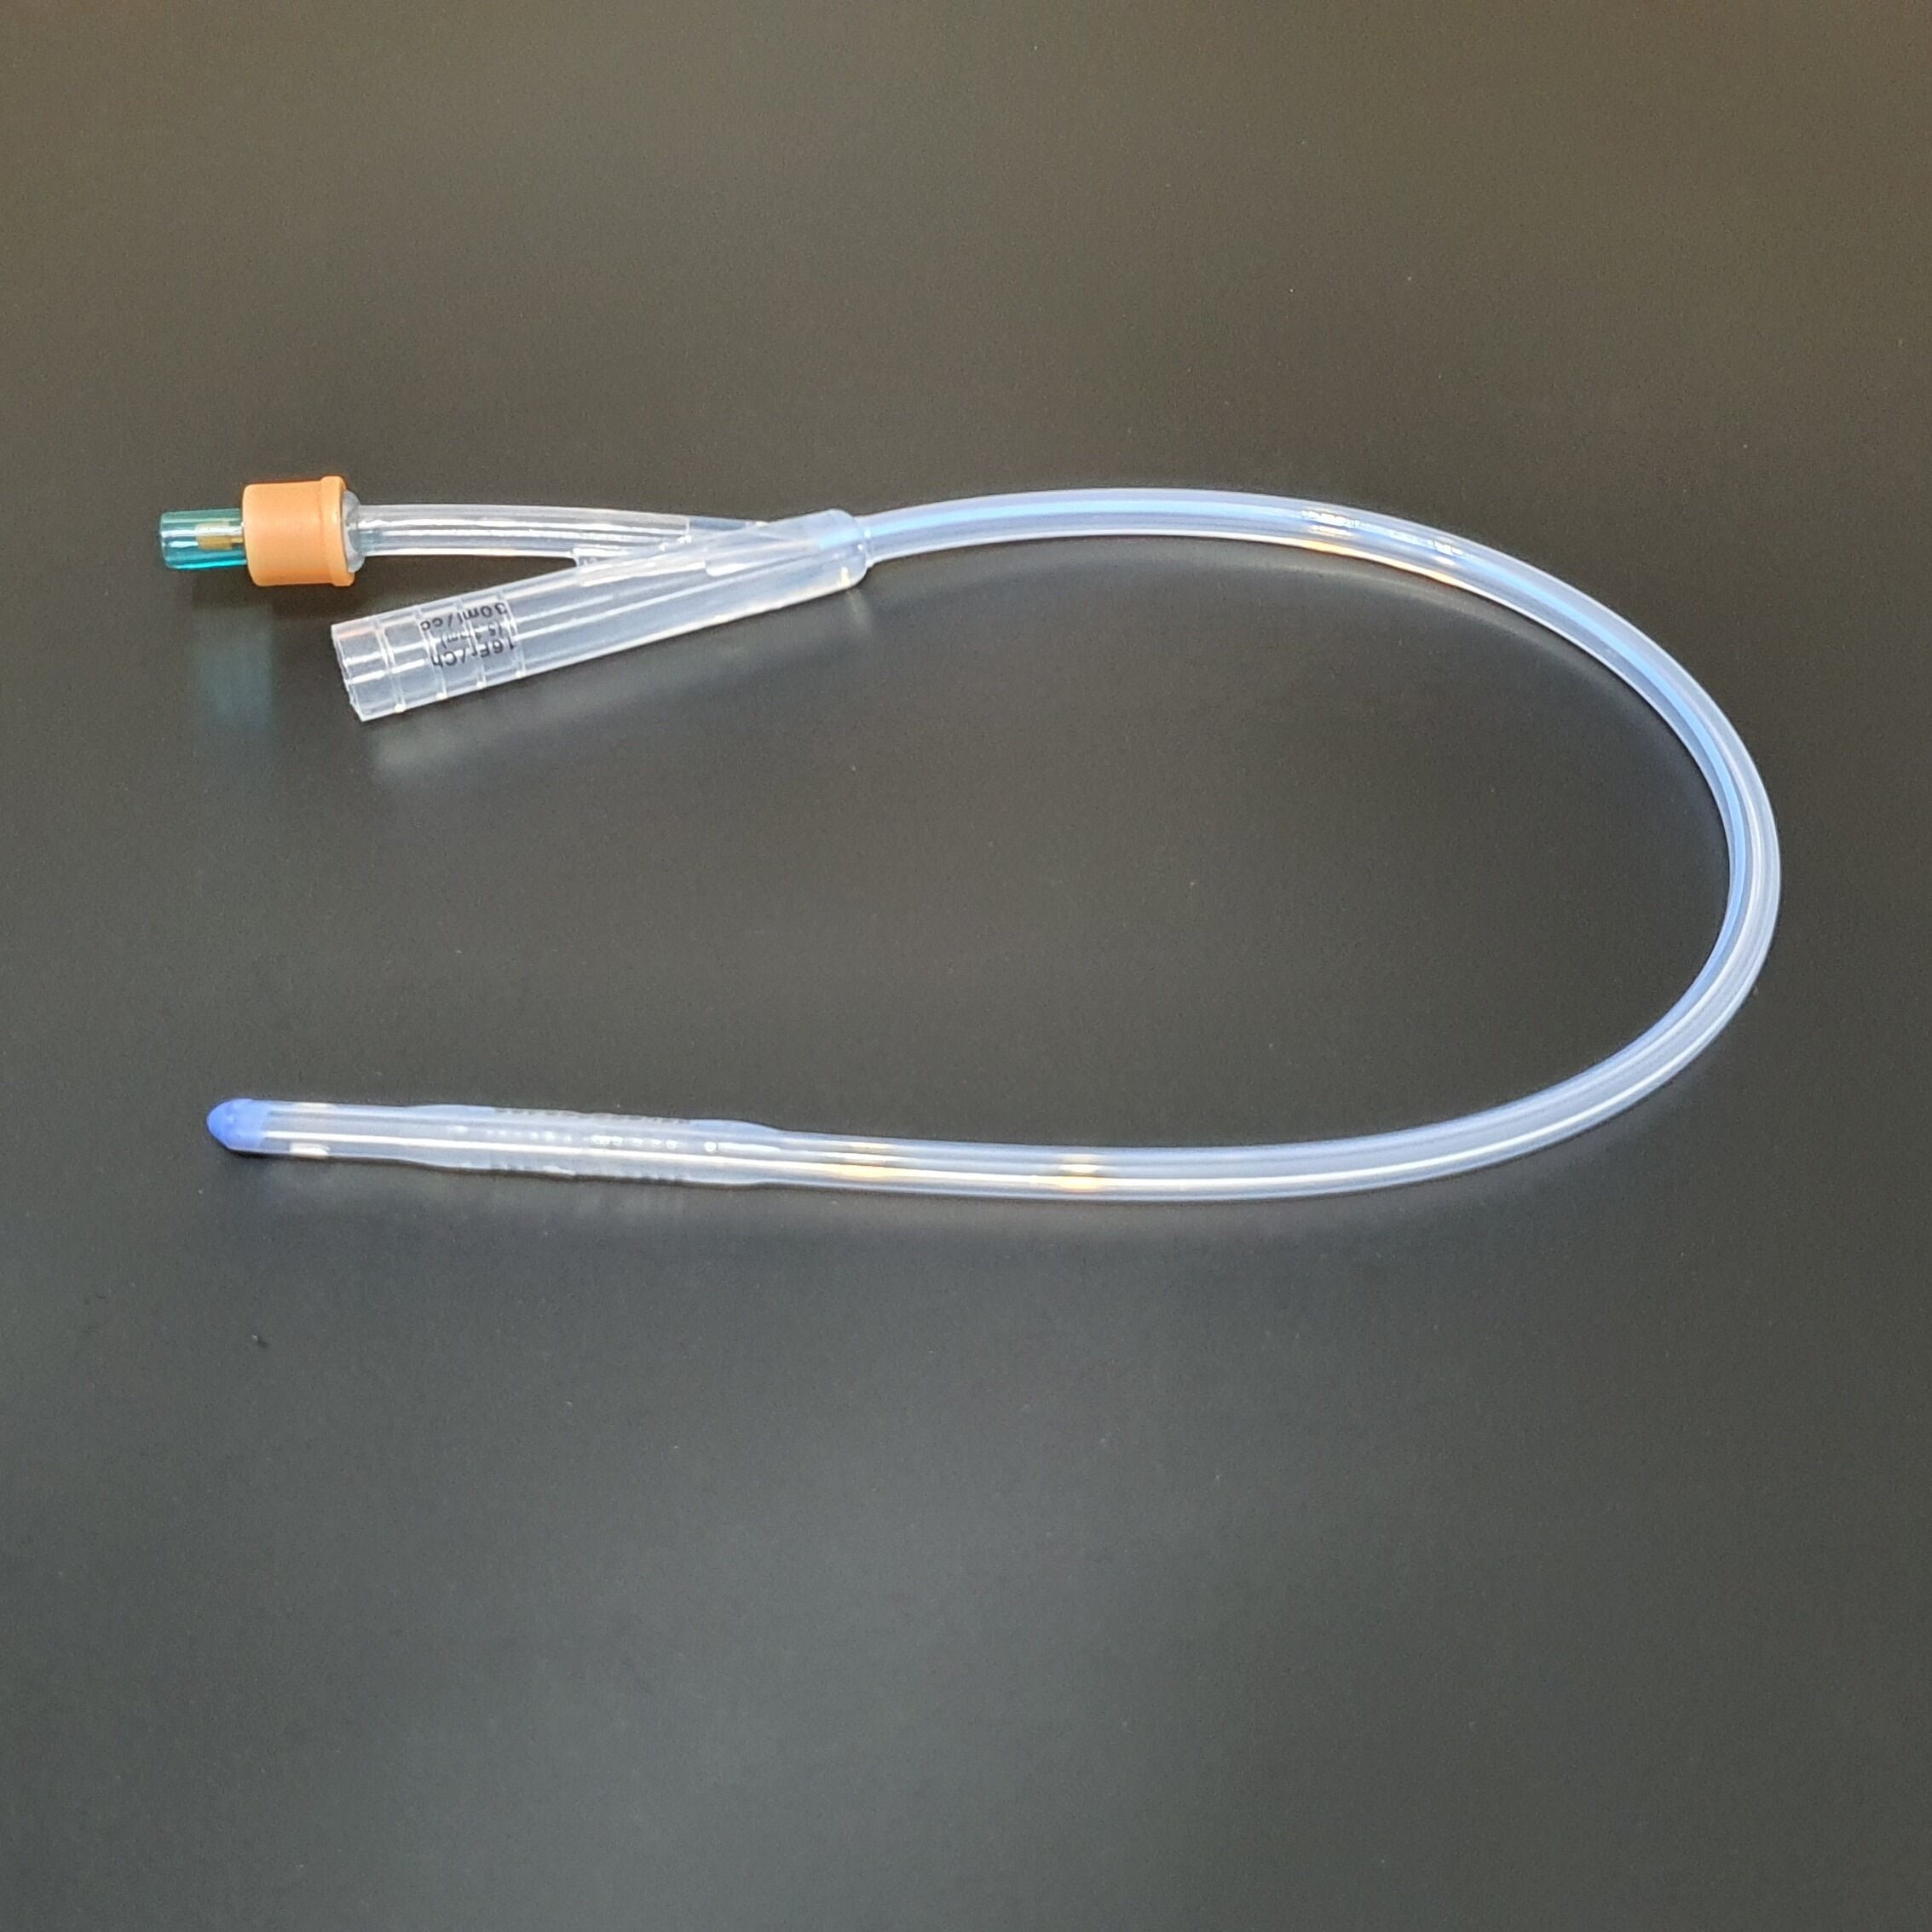 Silicone Foley Catheter 2 ways สายสวนปัสสาวะซิลิโคน 2 ทาง